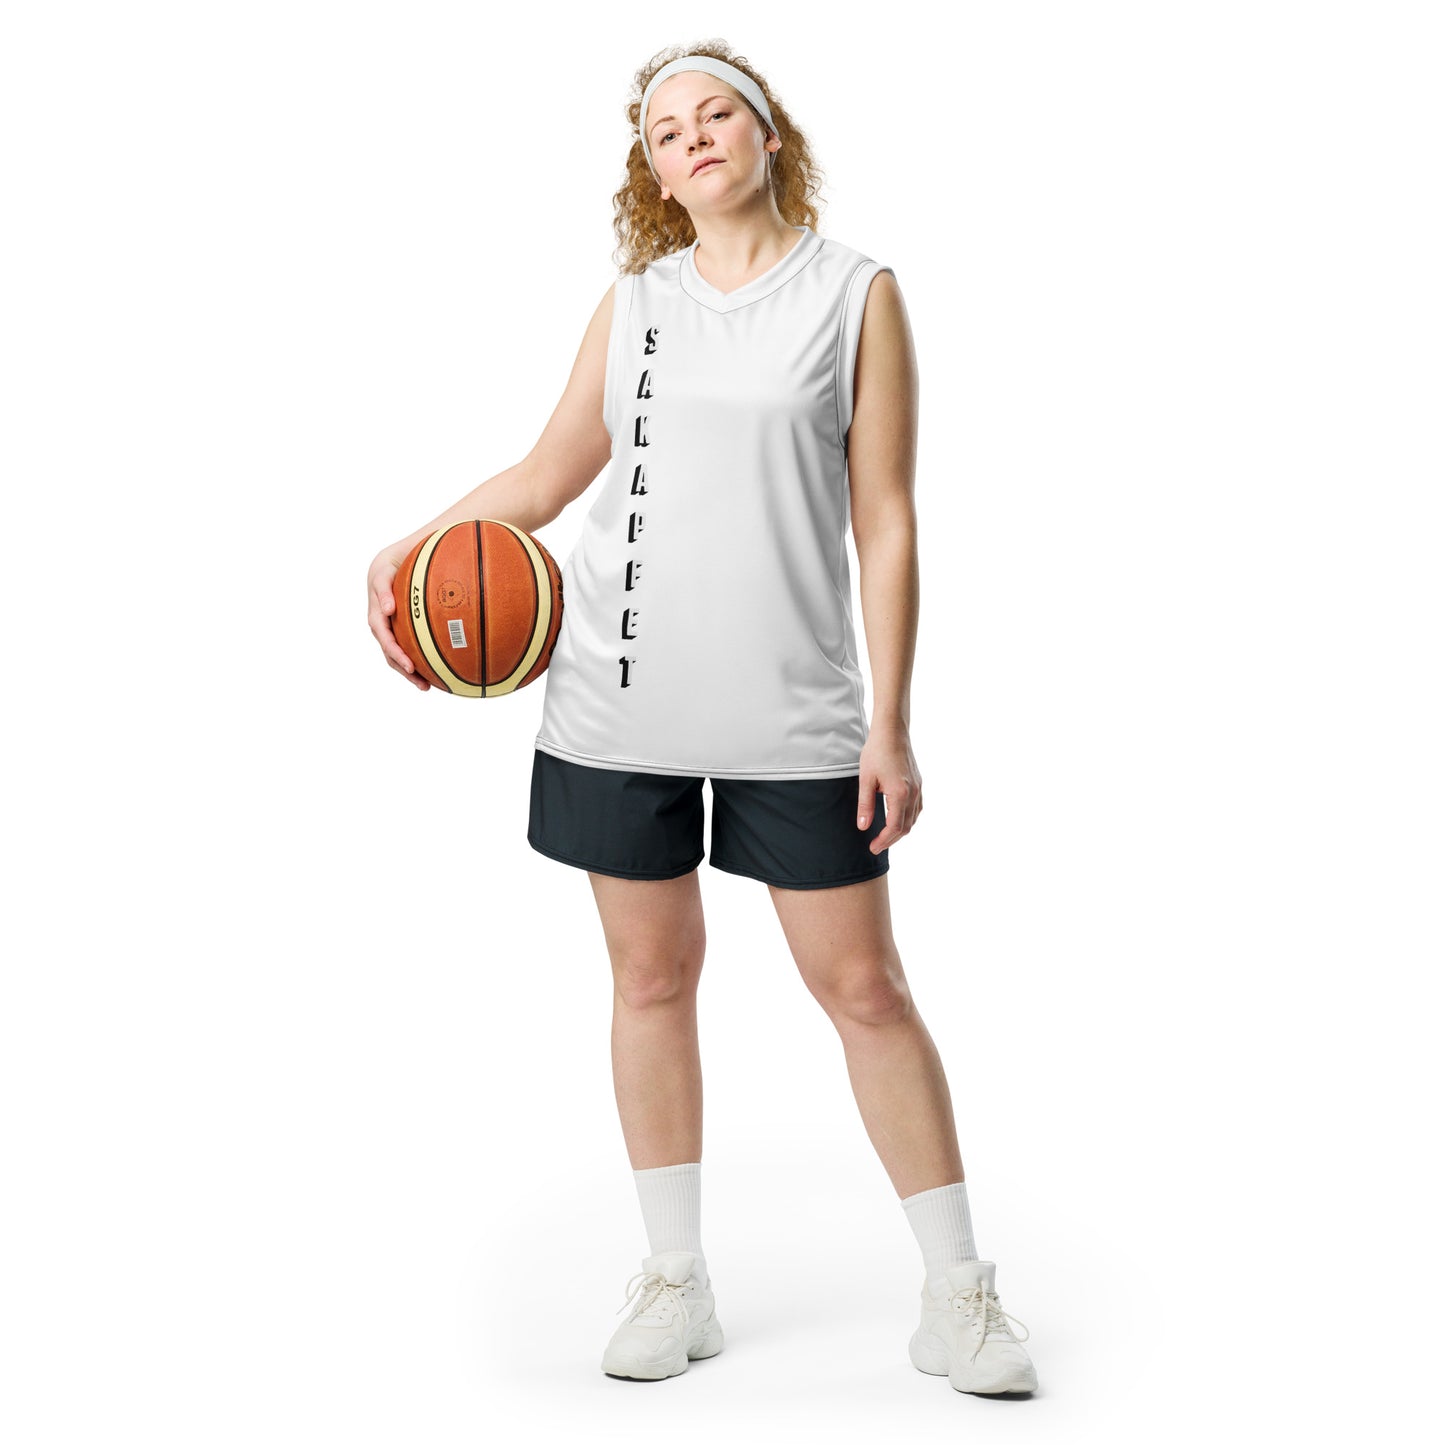 SAKAPFET Recycled unisex basketball jersey